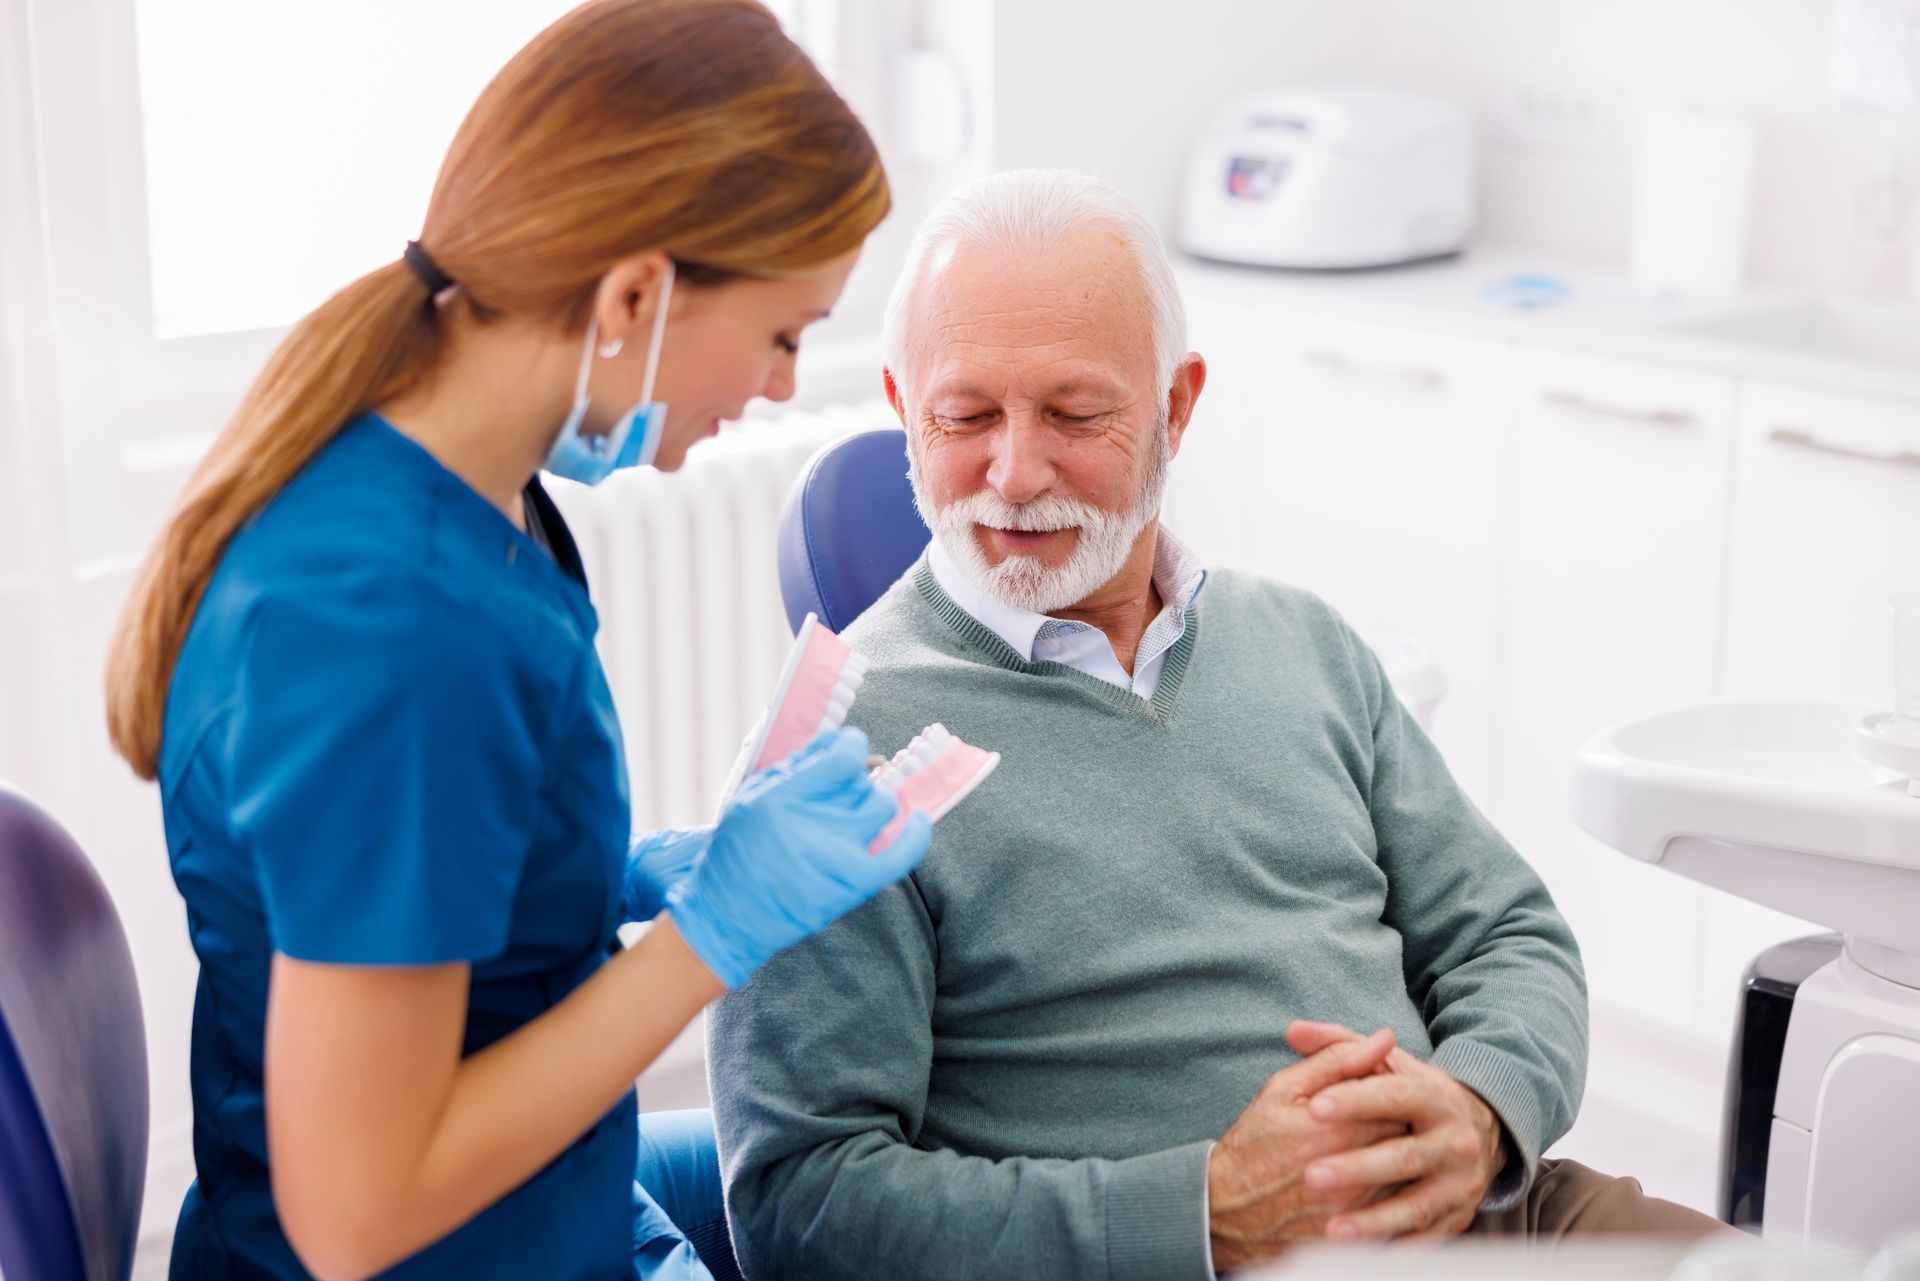 an elderly man is sitting in a dental chair while a dentist examines his teeth.